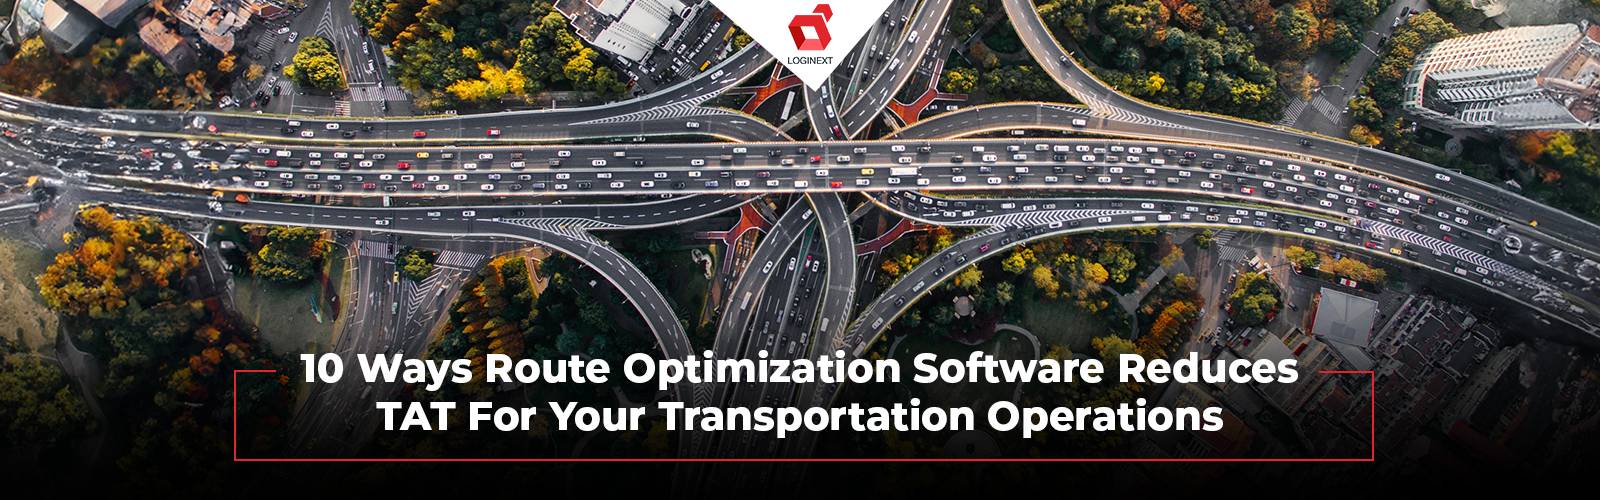 Route Optimization Software Reduces TAT